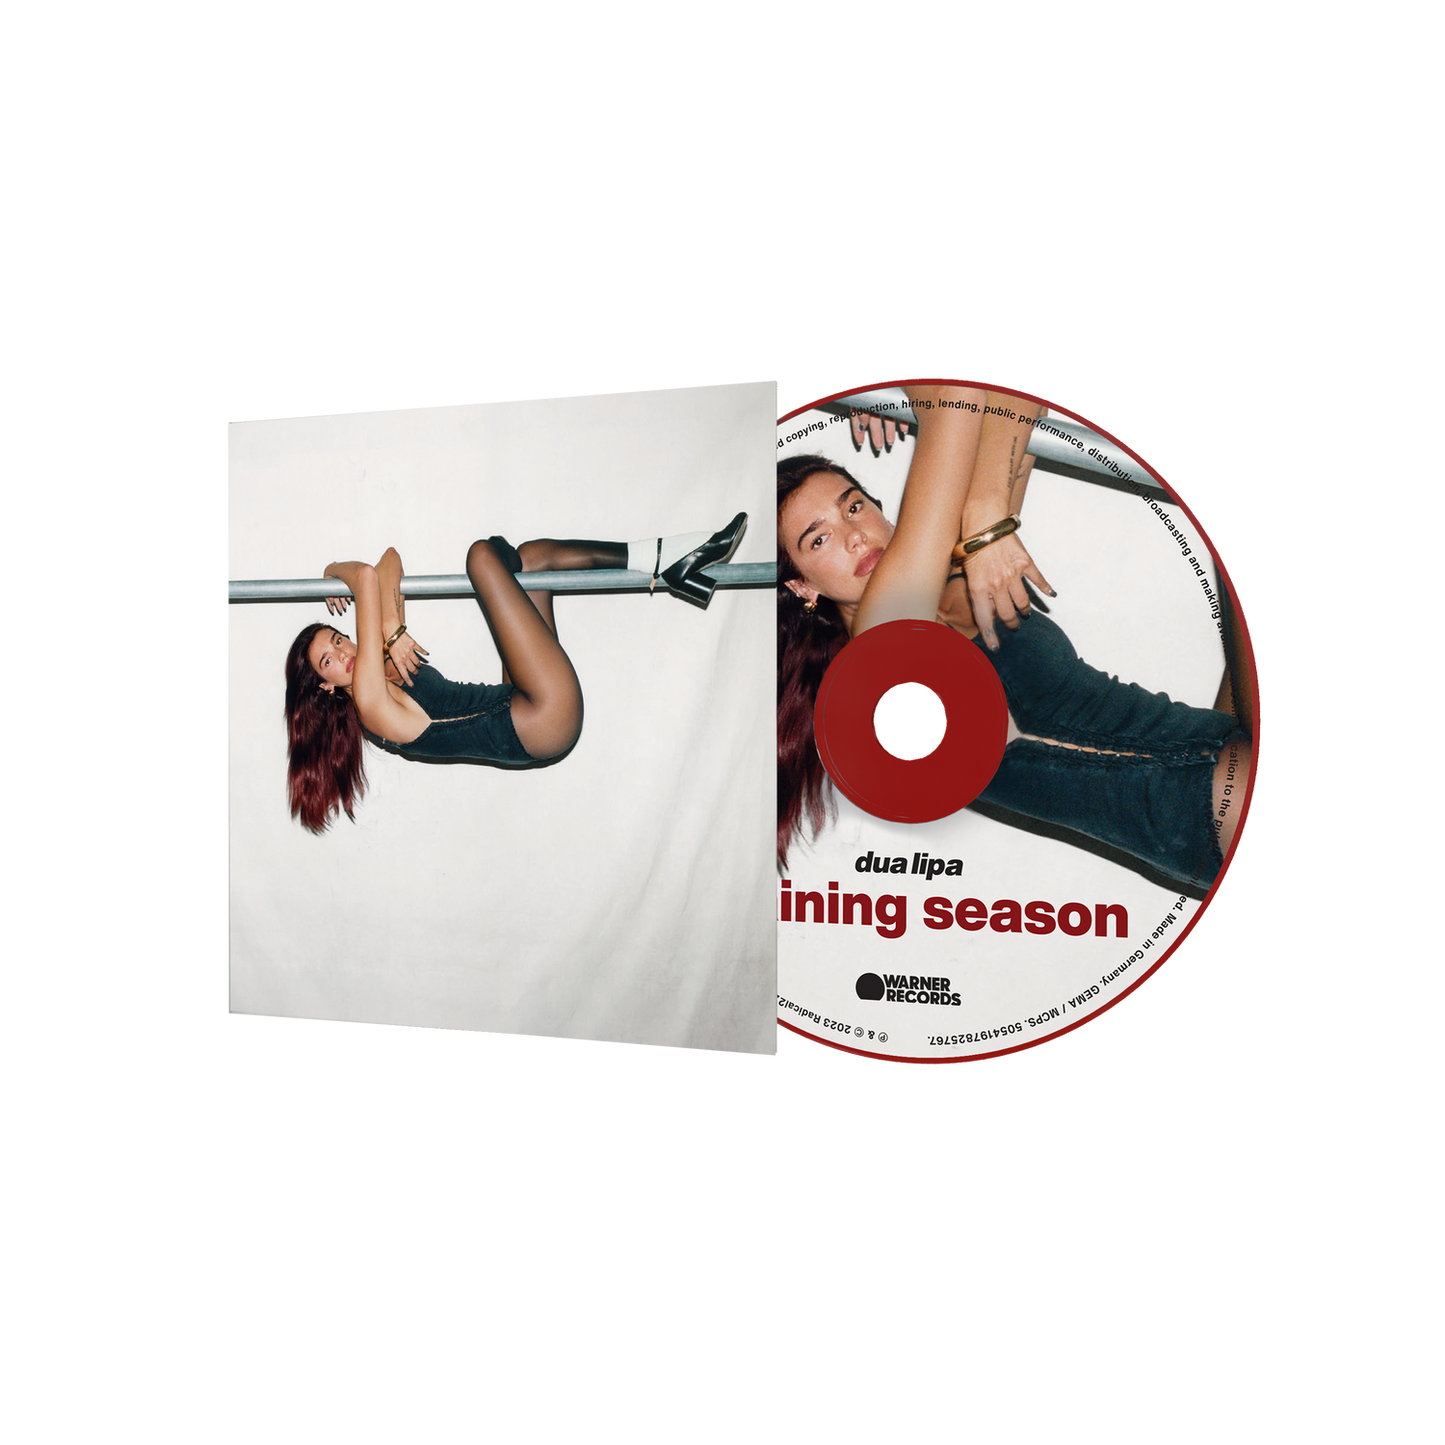 Dua-Lipa_Training_Season_CD_Single_Limited_Edition